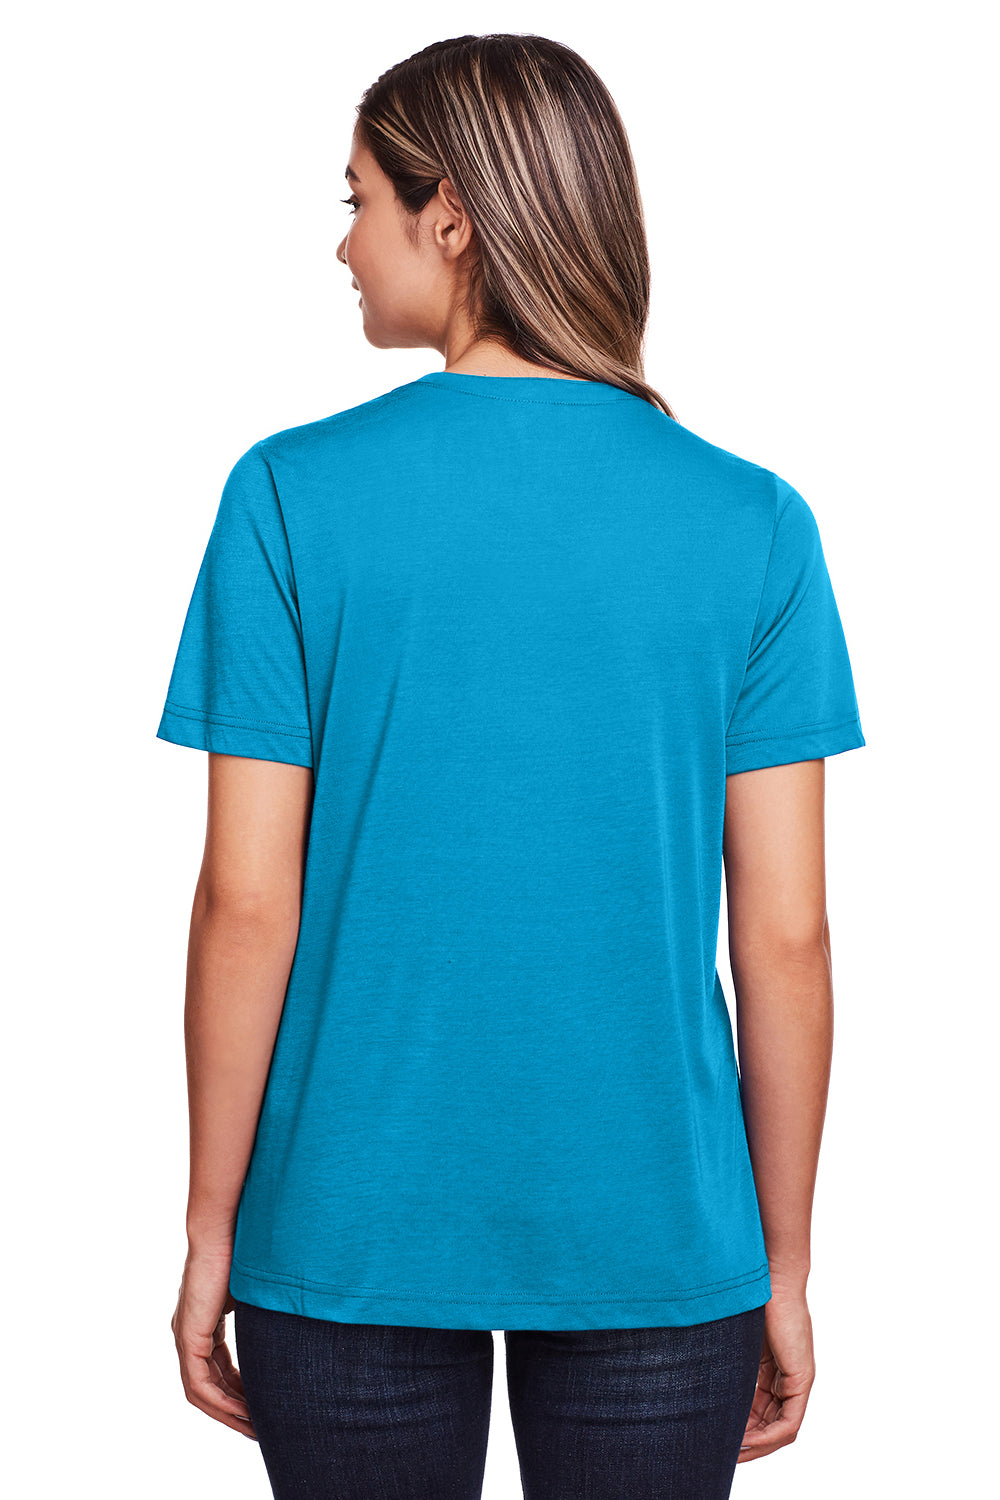 Core 365 CE111W Womens Fusion ChromaSoft Performance Moisture Wicking Short Sleeve Scoop Neck T-Shirt Electric Blue Back